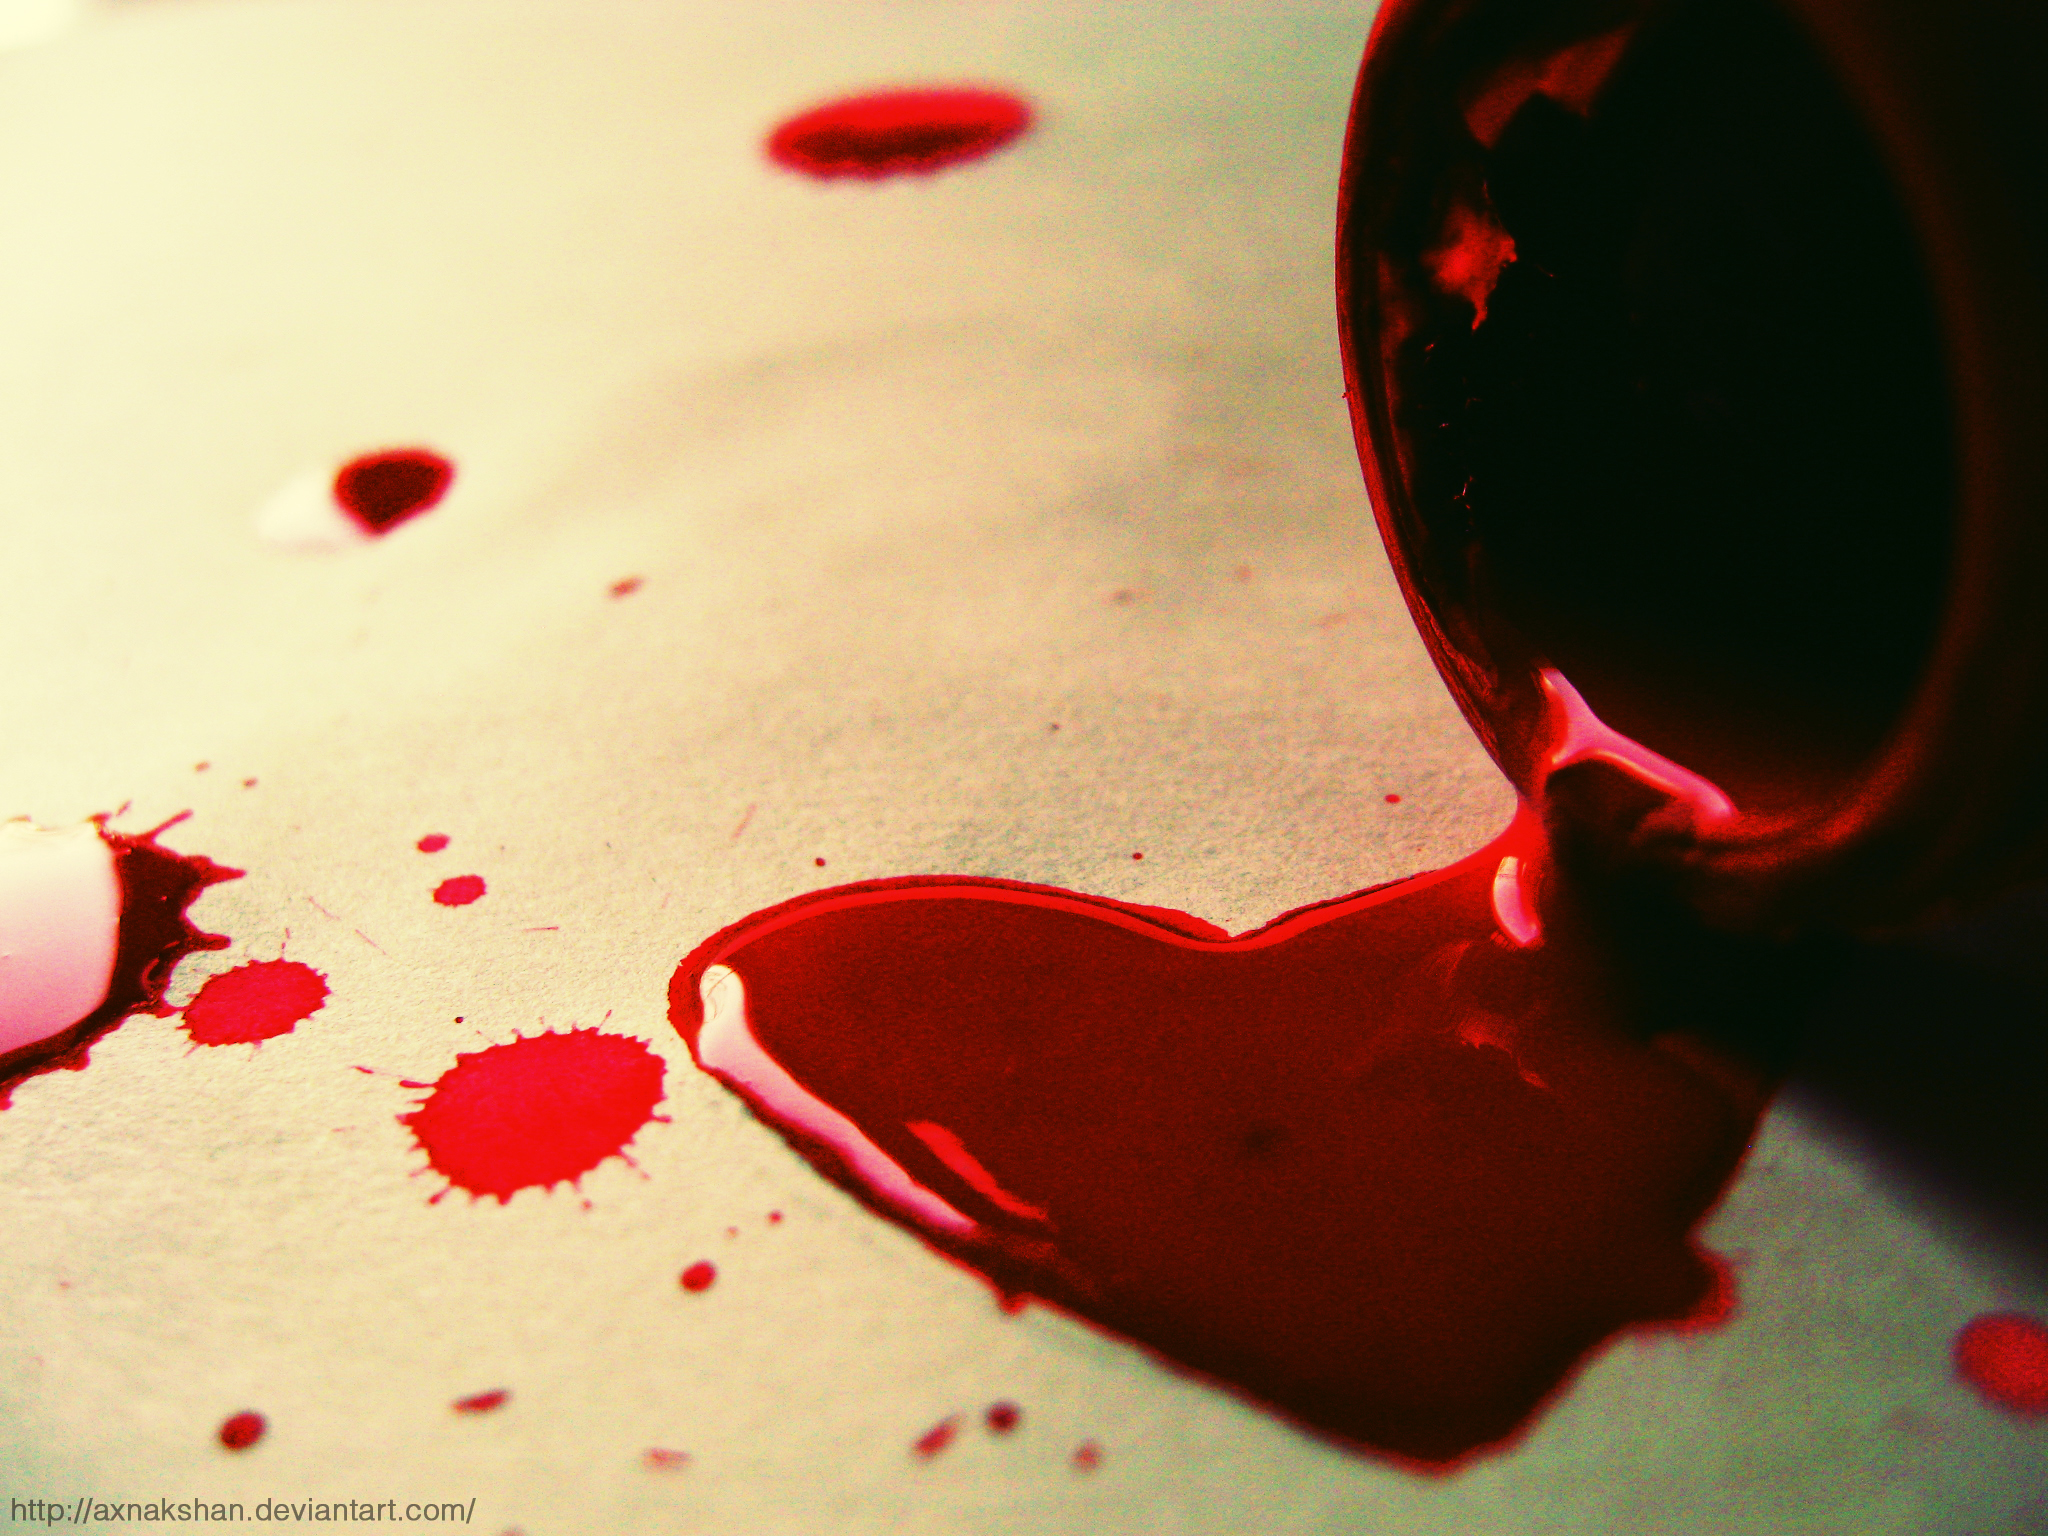 Keep Bleeding Love by AxnAkshan on DeviantArt